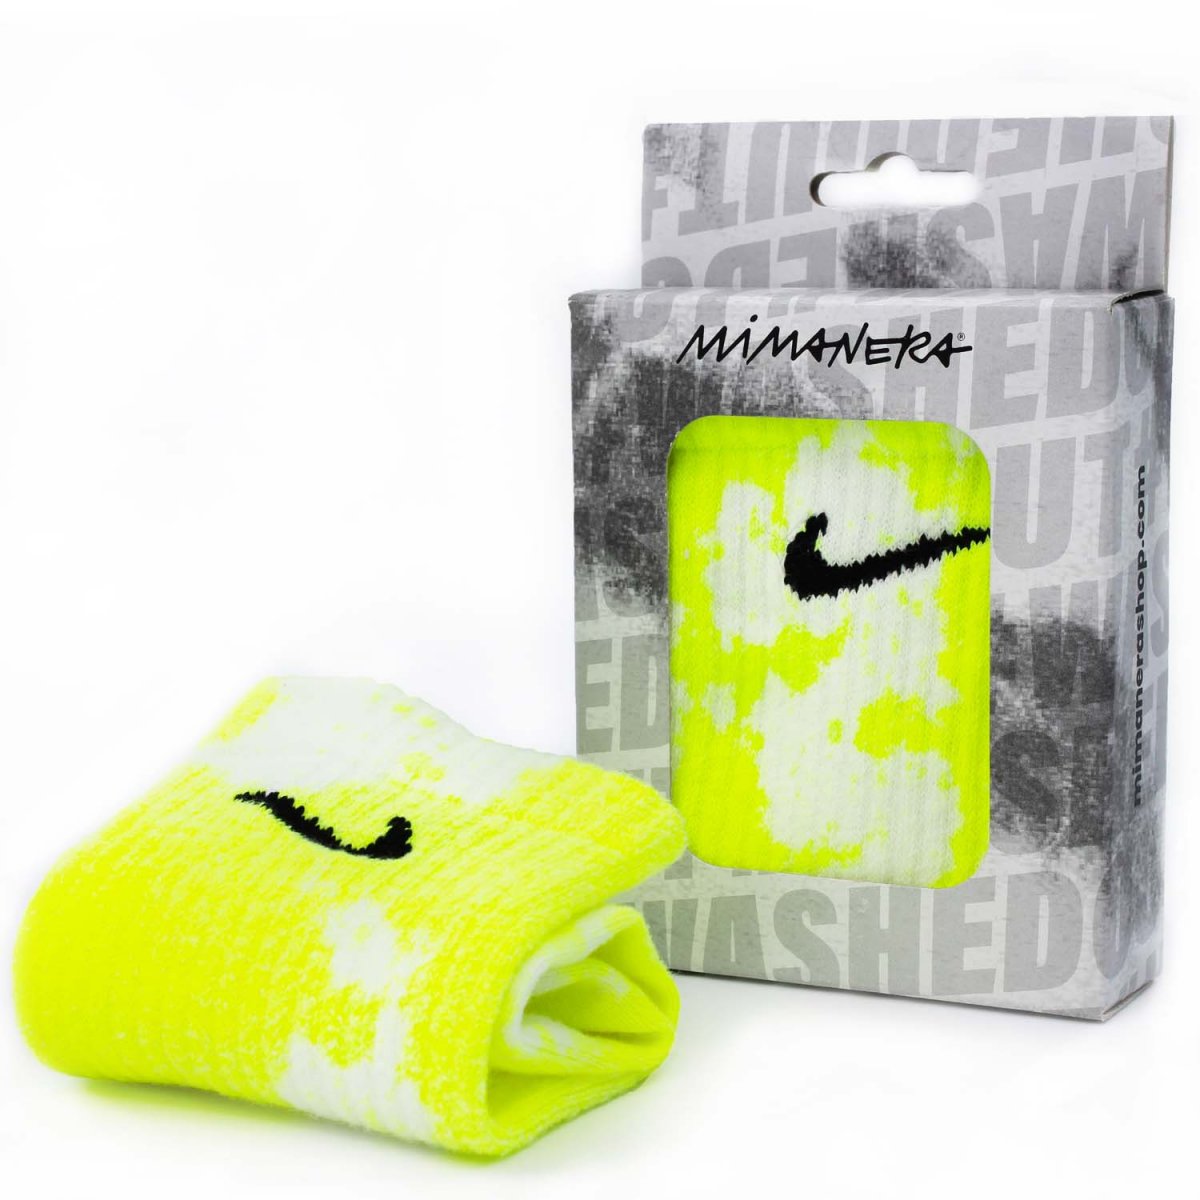 Nike Socks Fluo Yellow  